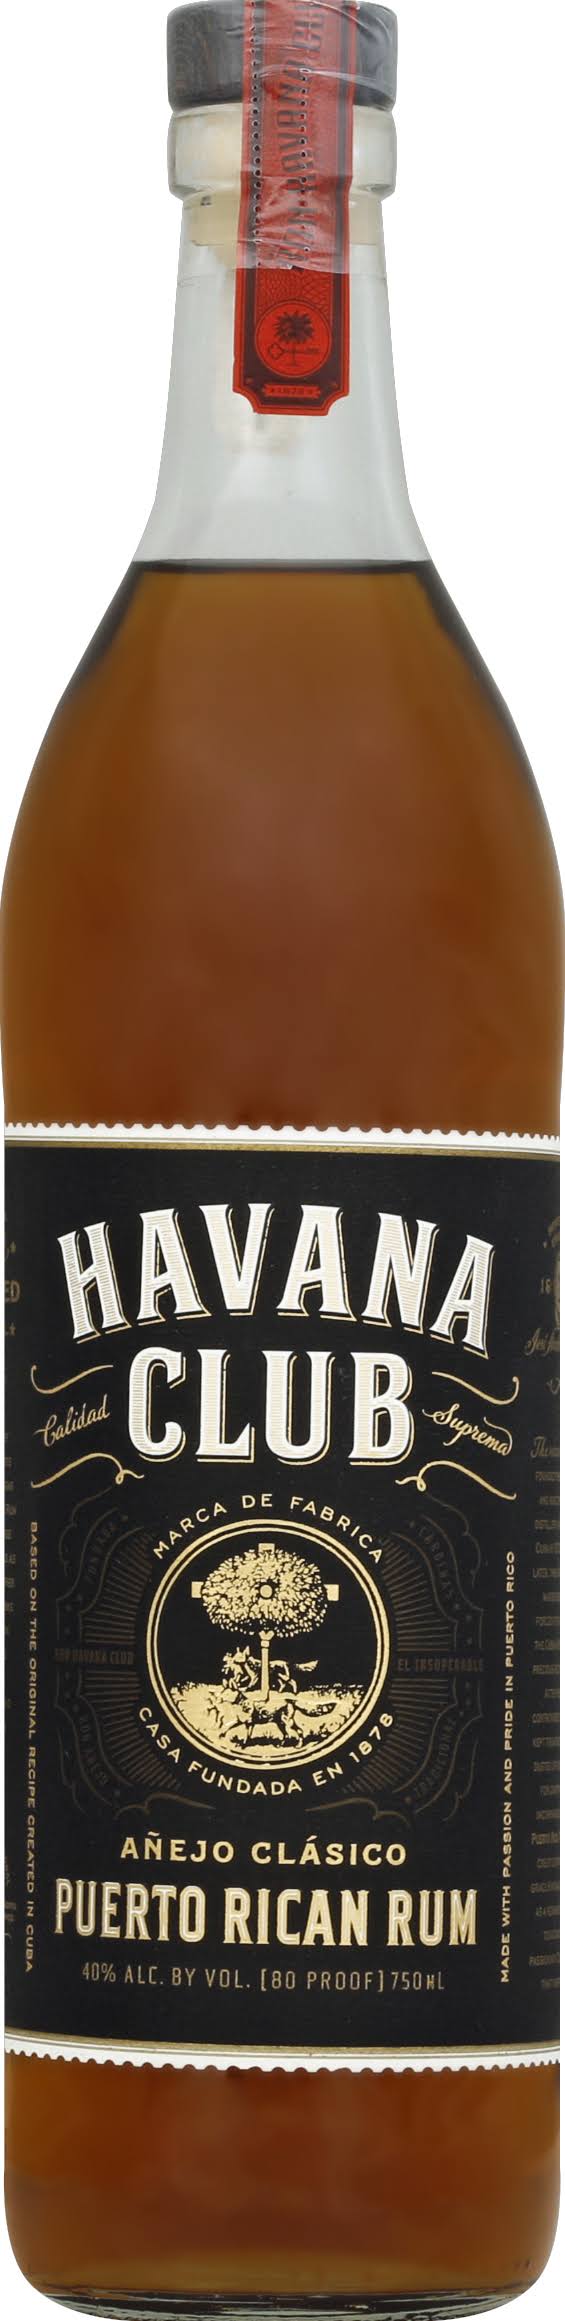 Havana Club Anejo Classico Puerto Rican Rum - 750ml